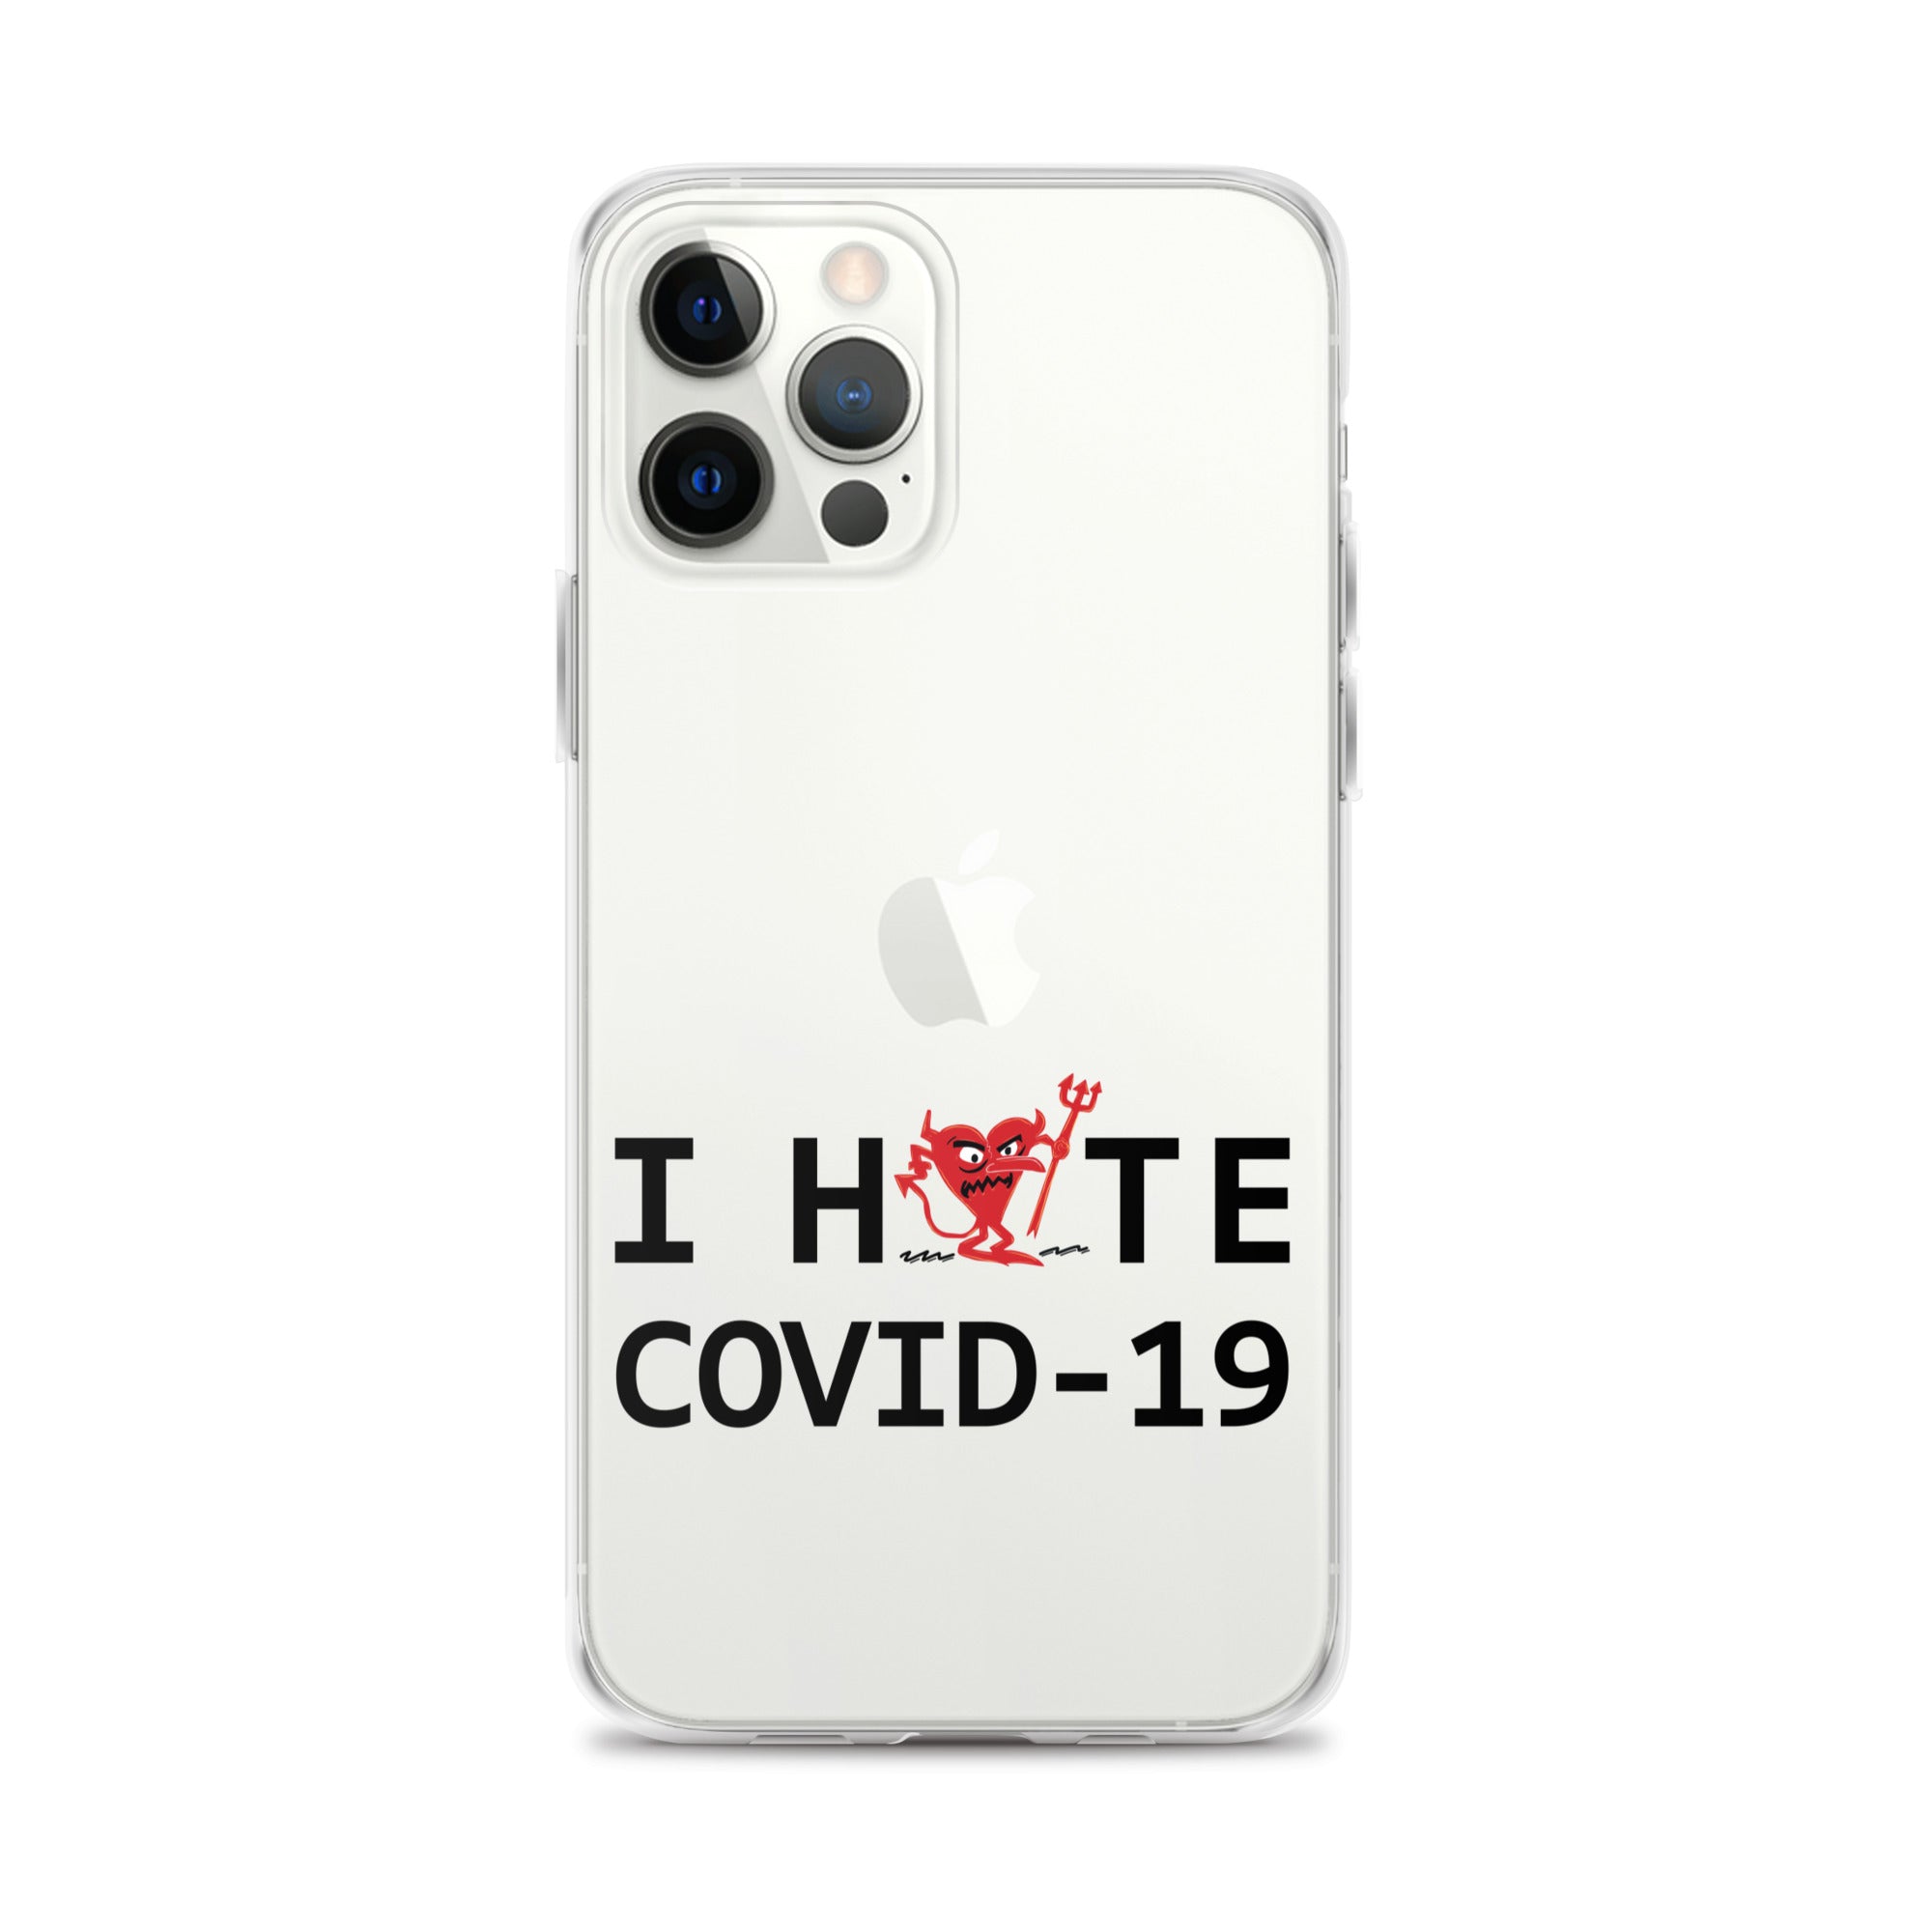 I Hate COVID-19 iPhone Case